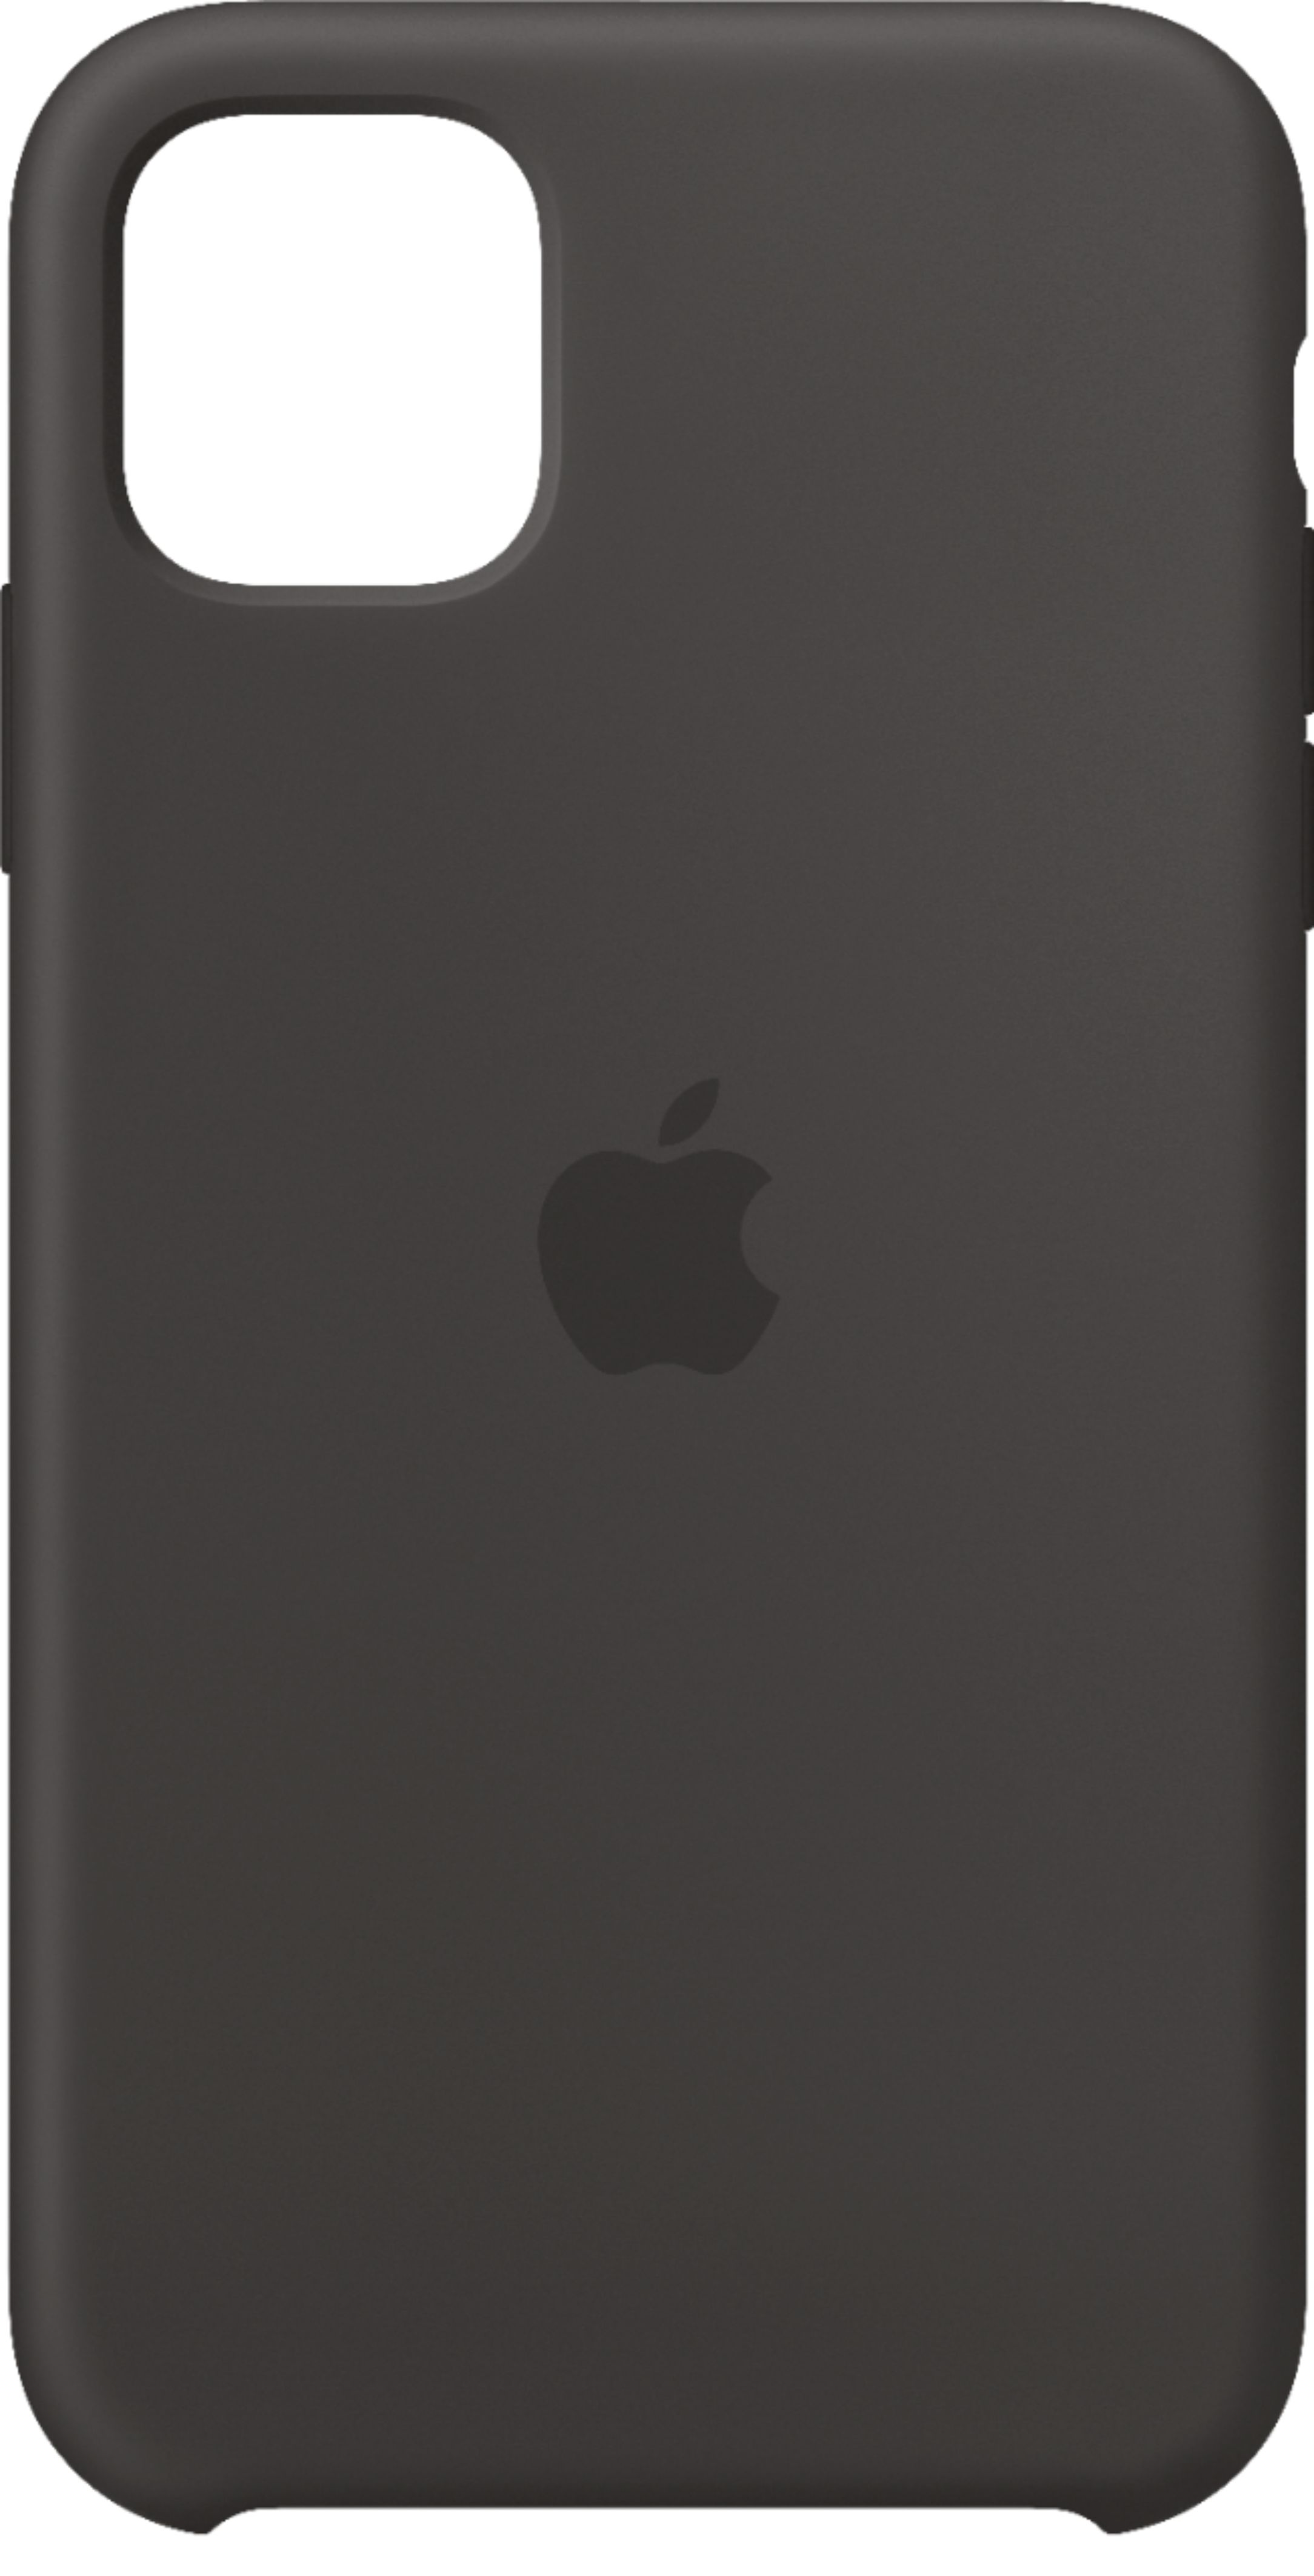 Apple Iphone 11 Silicone Case Black Mwvu2zm A Best Buy